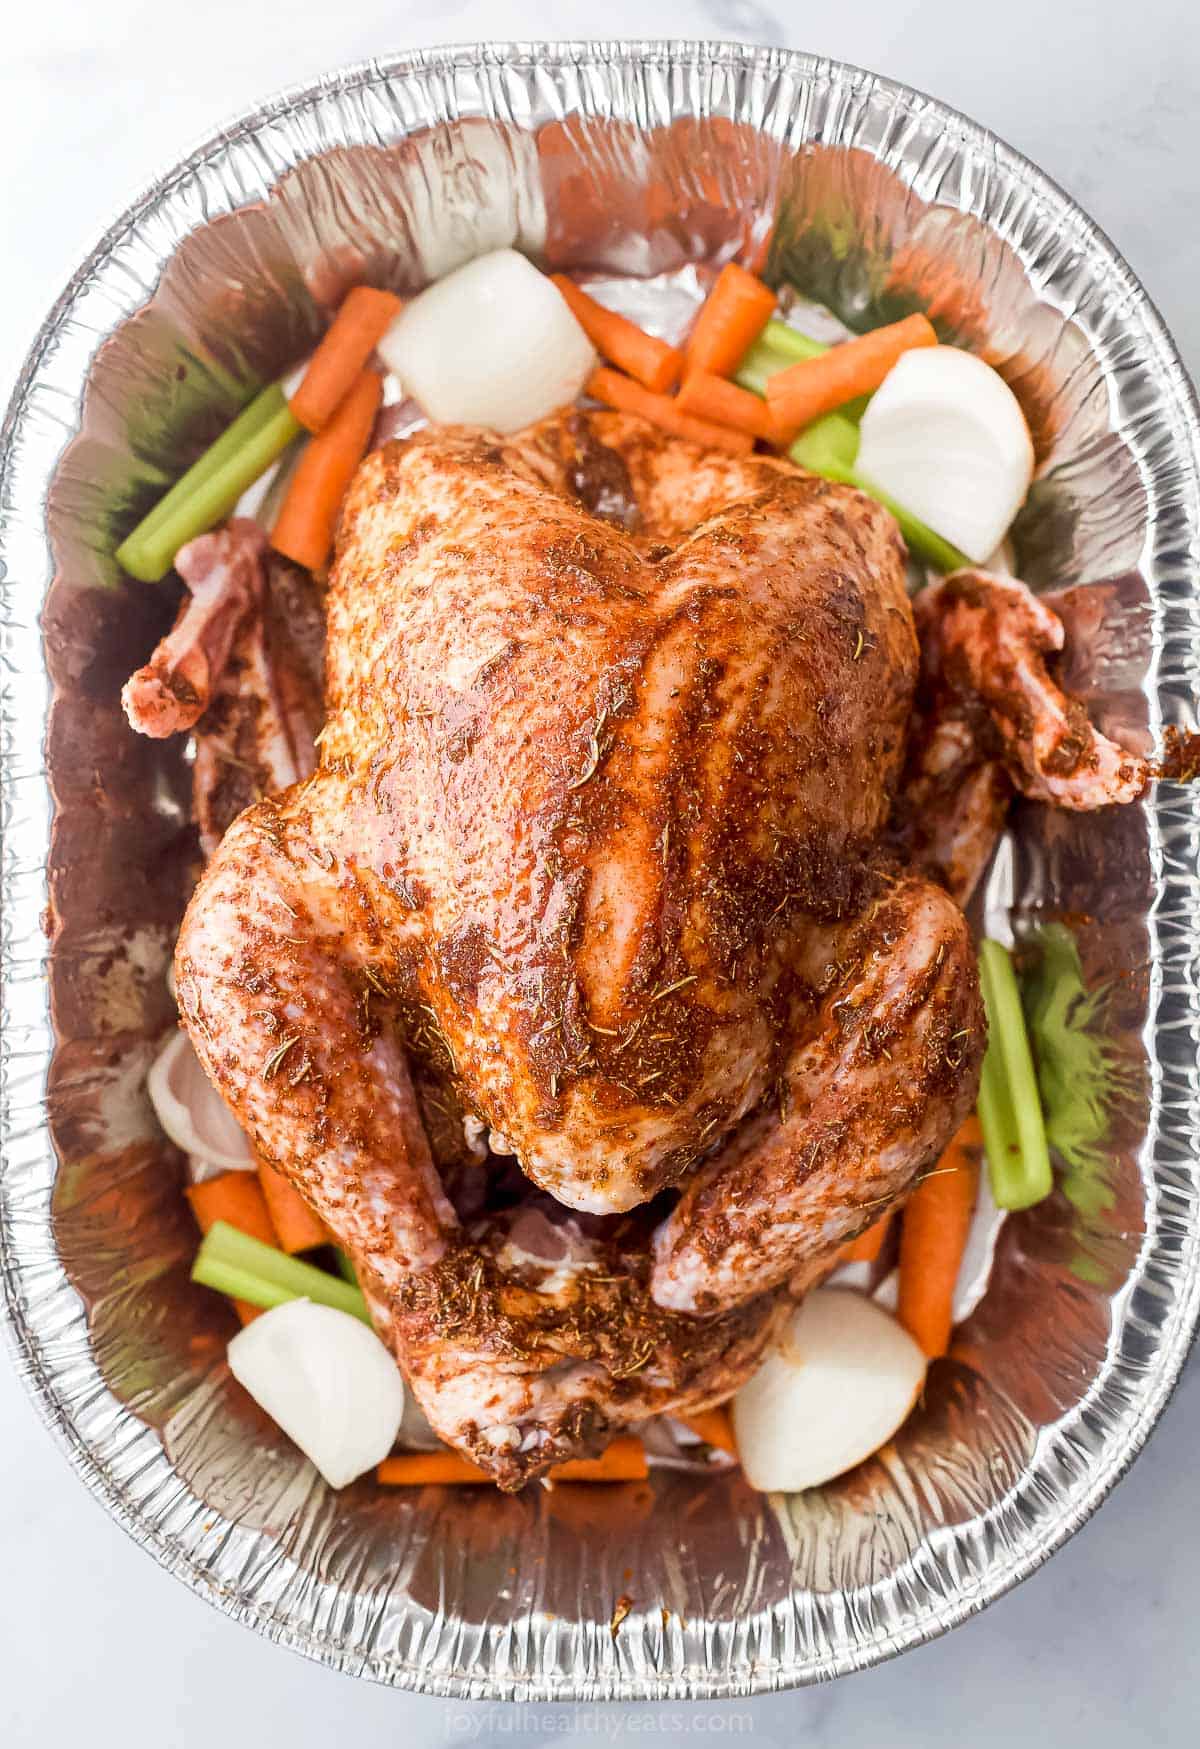 seasoned turkey in a roasted pan with veggies